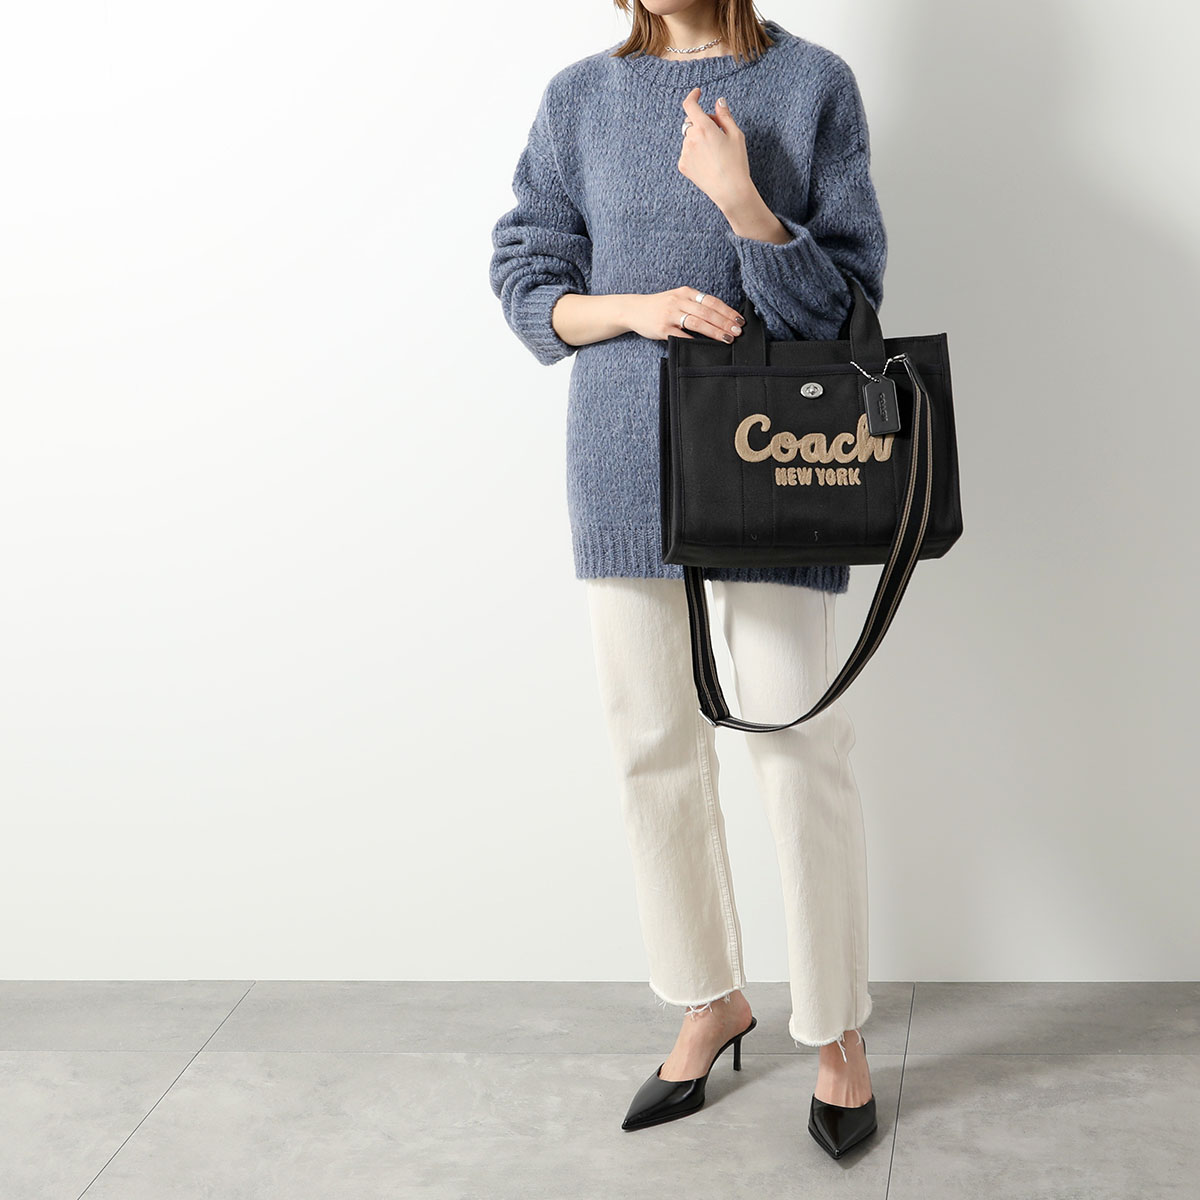 COACH Coach ручная сумочка CARGO TOTE cargo большая сумка CP158 женский сумка на плечо Logo вышивка Cross корпус сумка цвет 6 цвет 